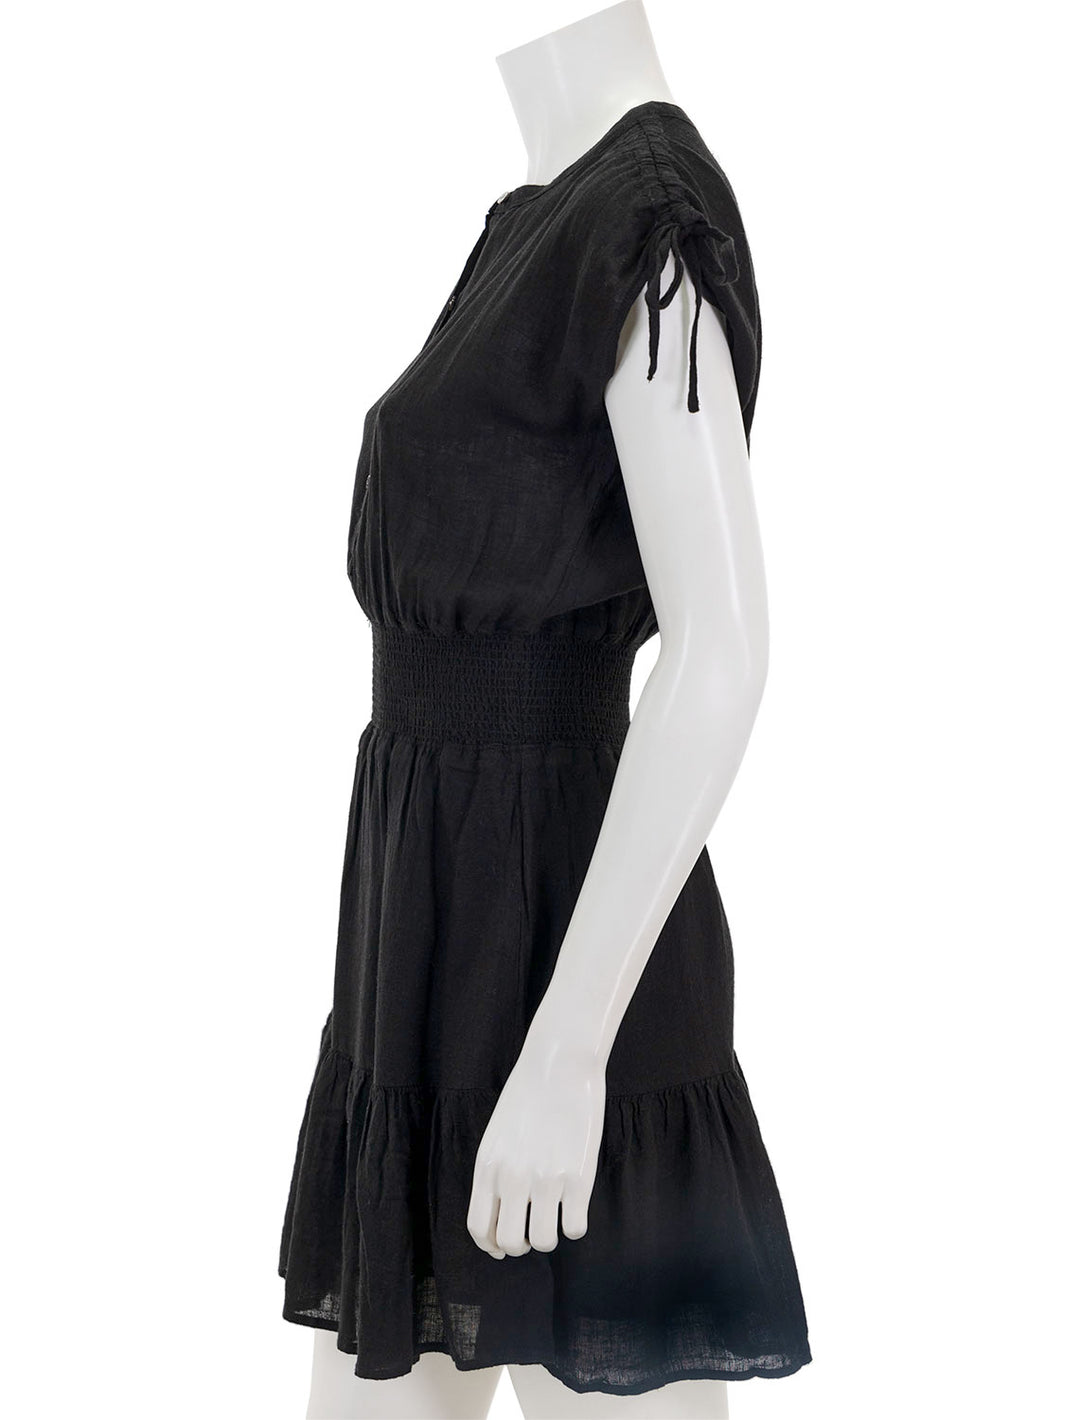 Side view of Rails' samina dress in black.